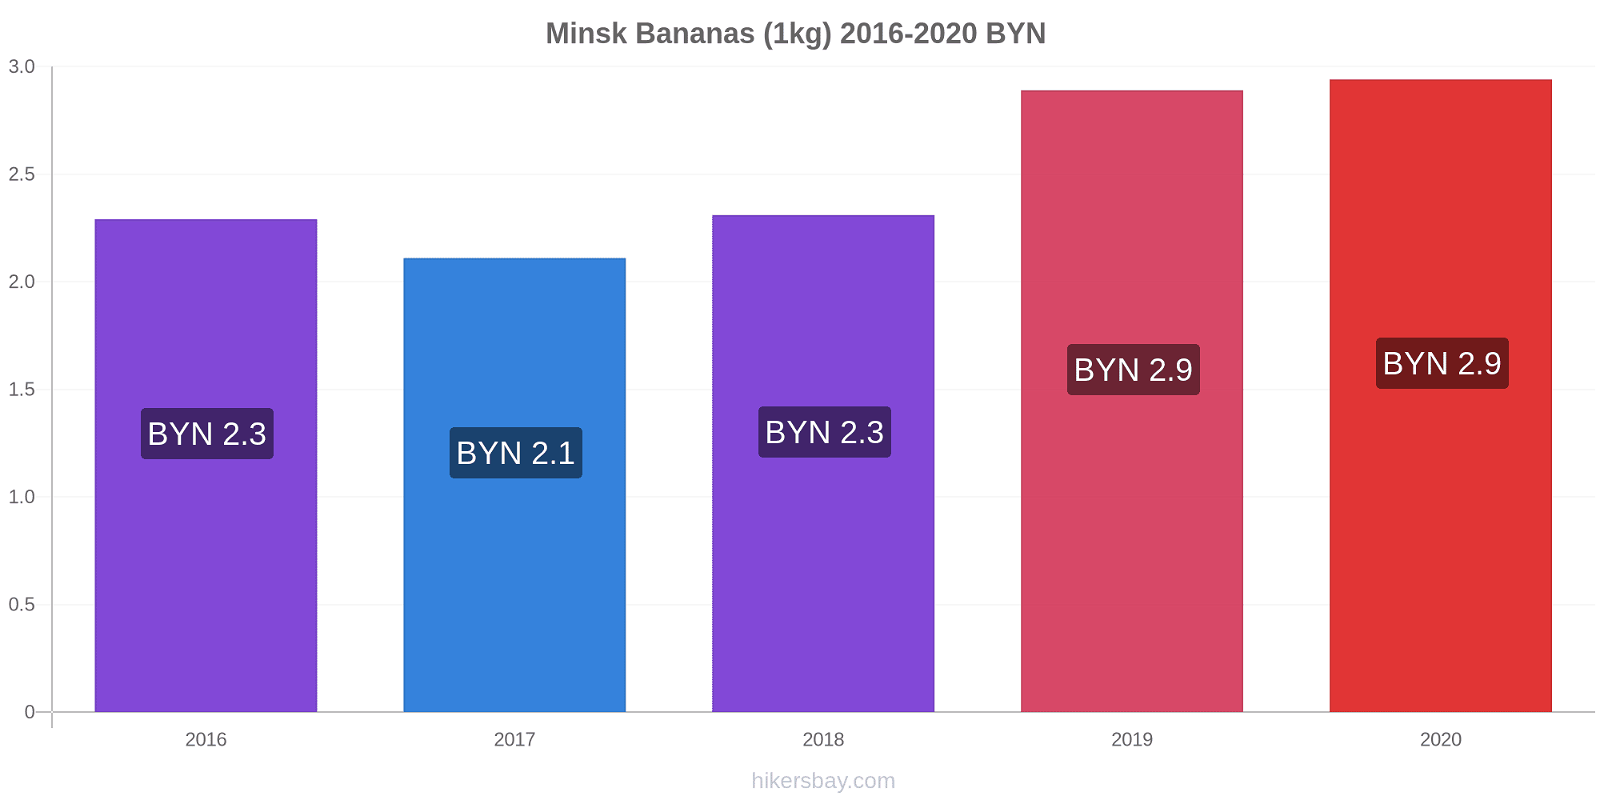 Minsk price changes Bananas (1kg) hikersbay.com